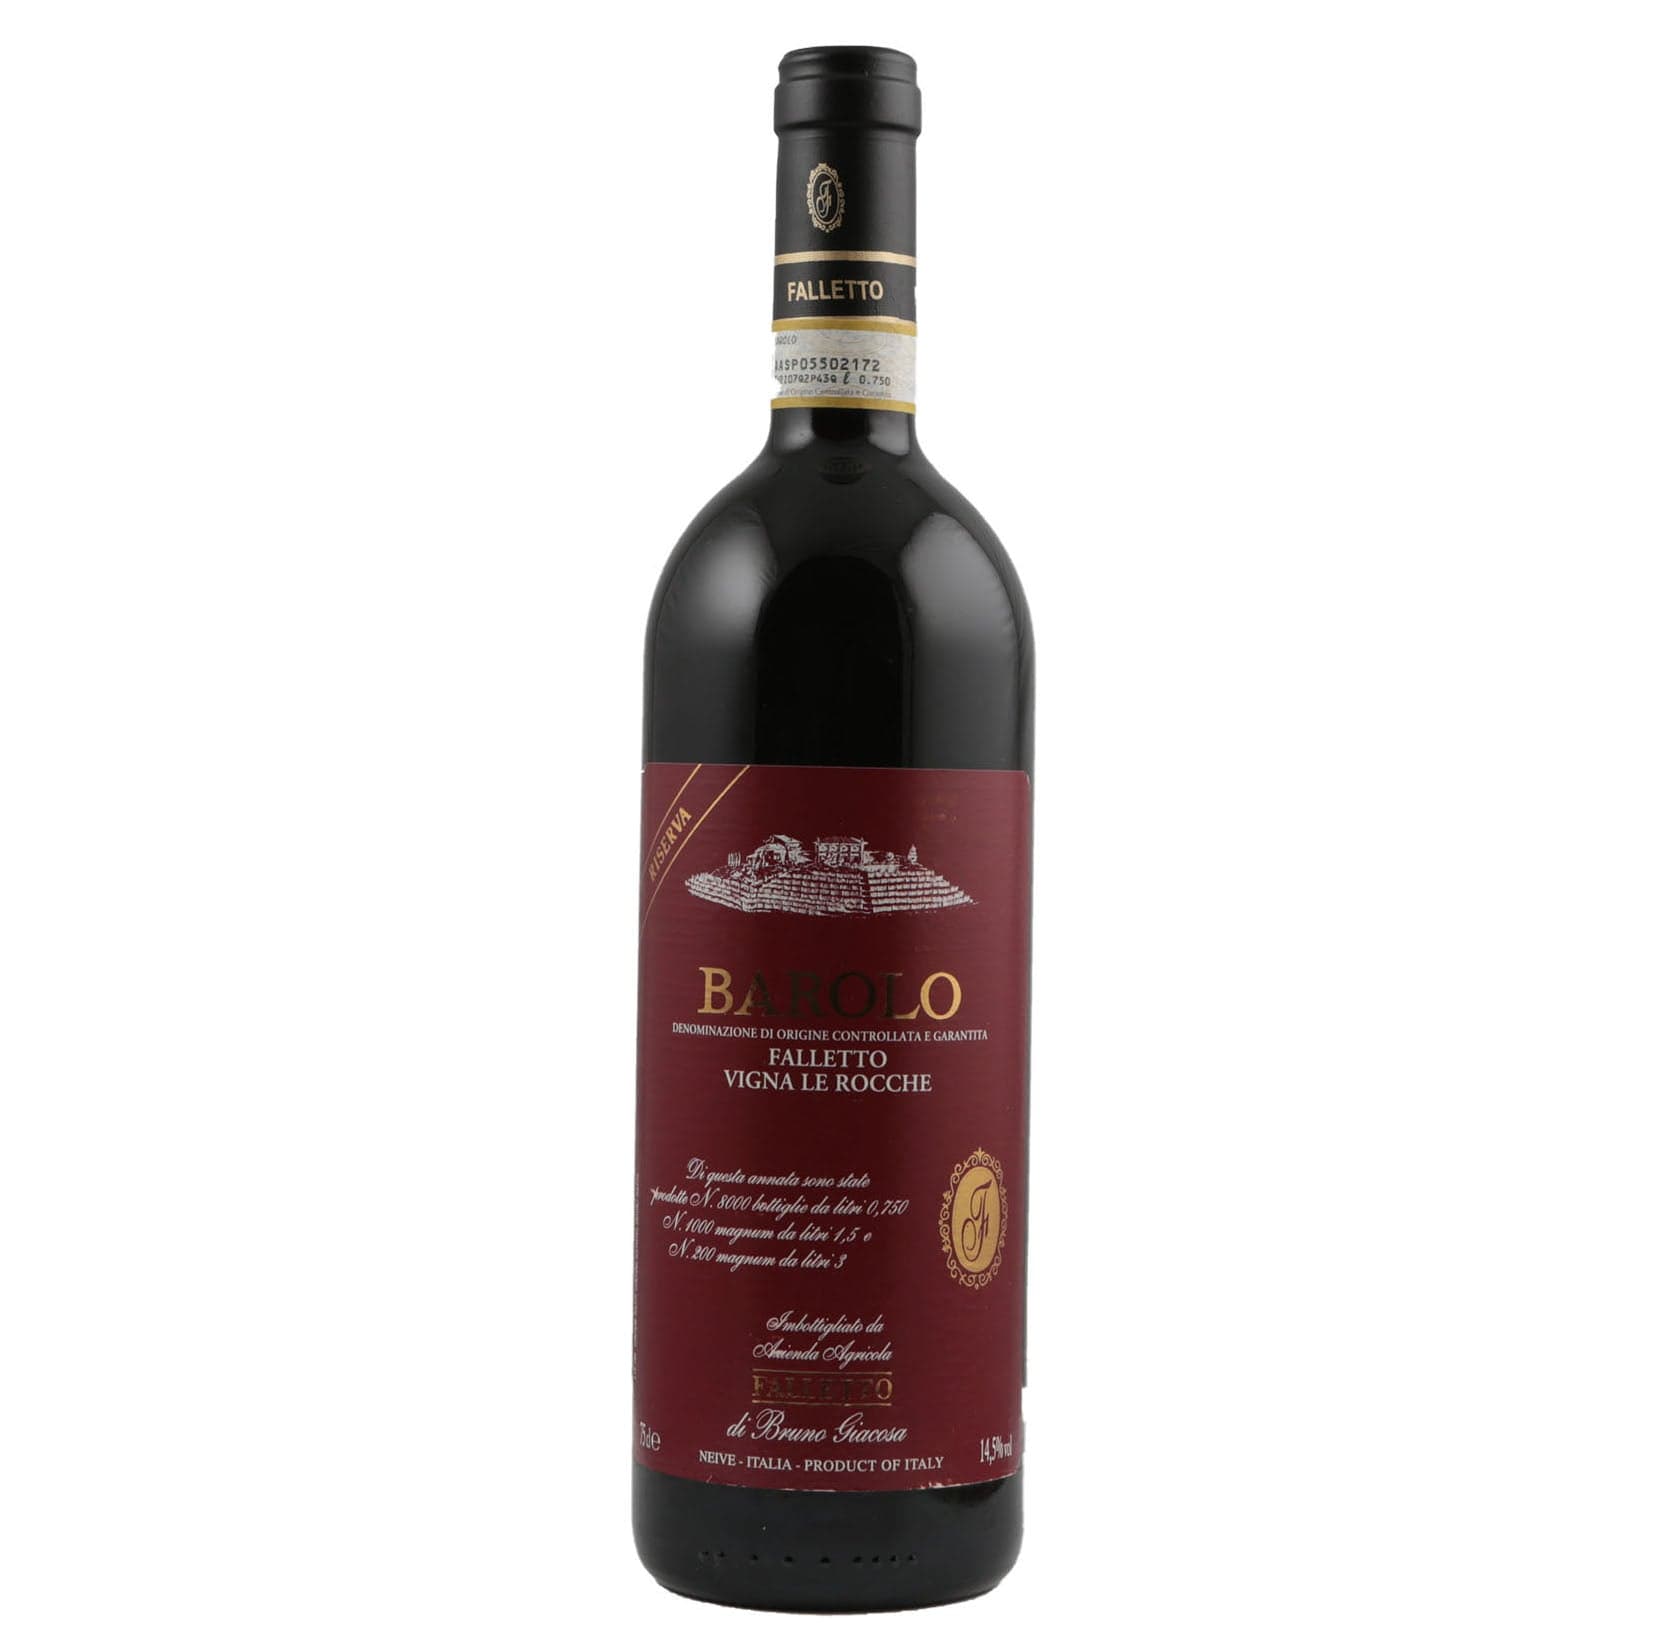 Single bottle of Red wine Bruno Giacosa, Asili Riserva, Barbaresco, 2011 100% Nebbiolo